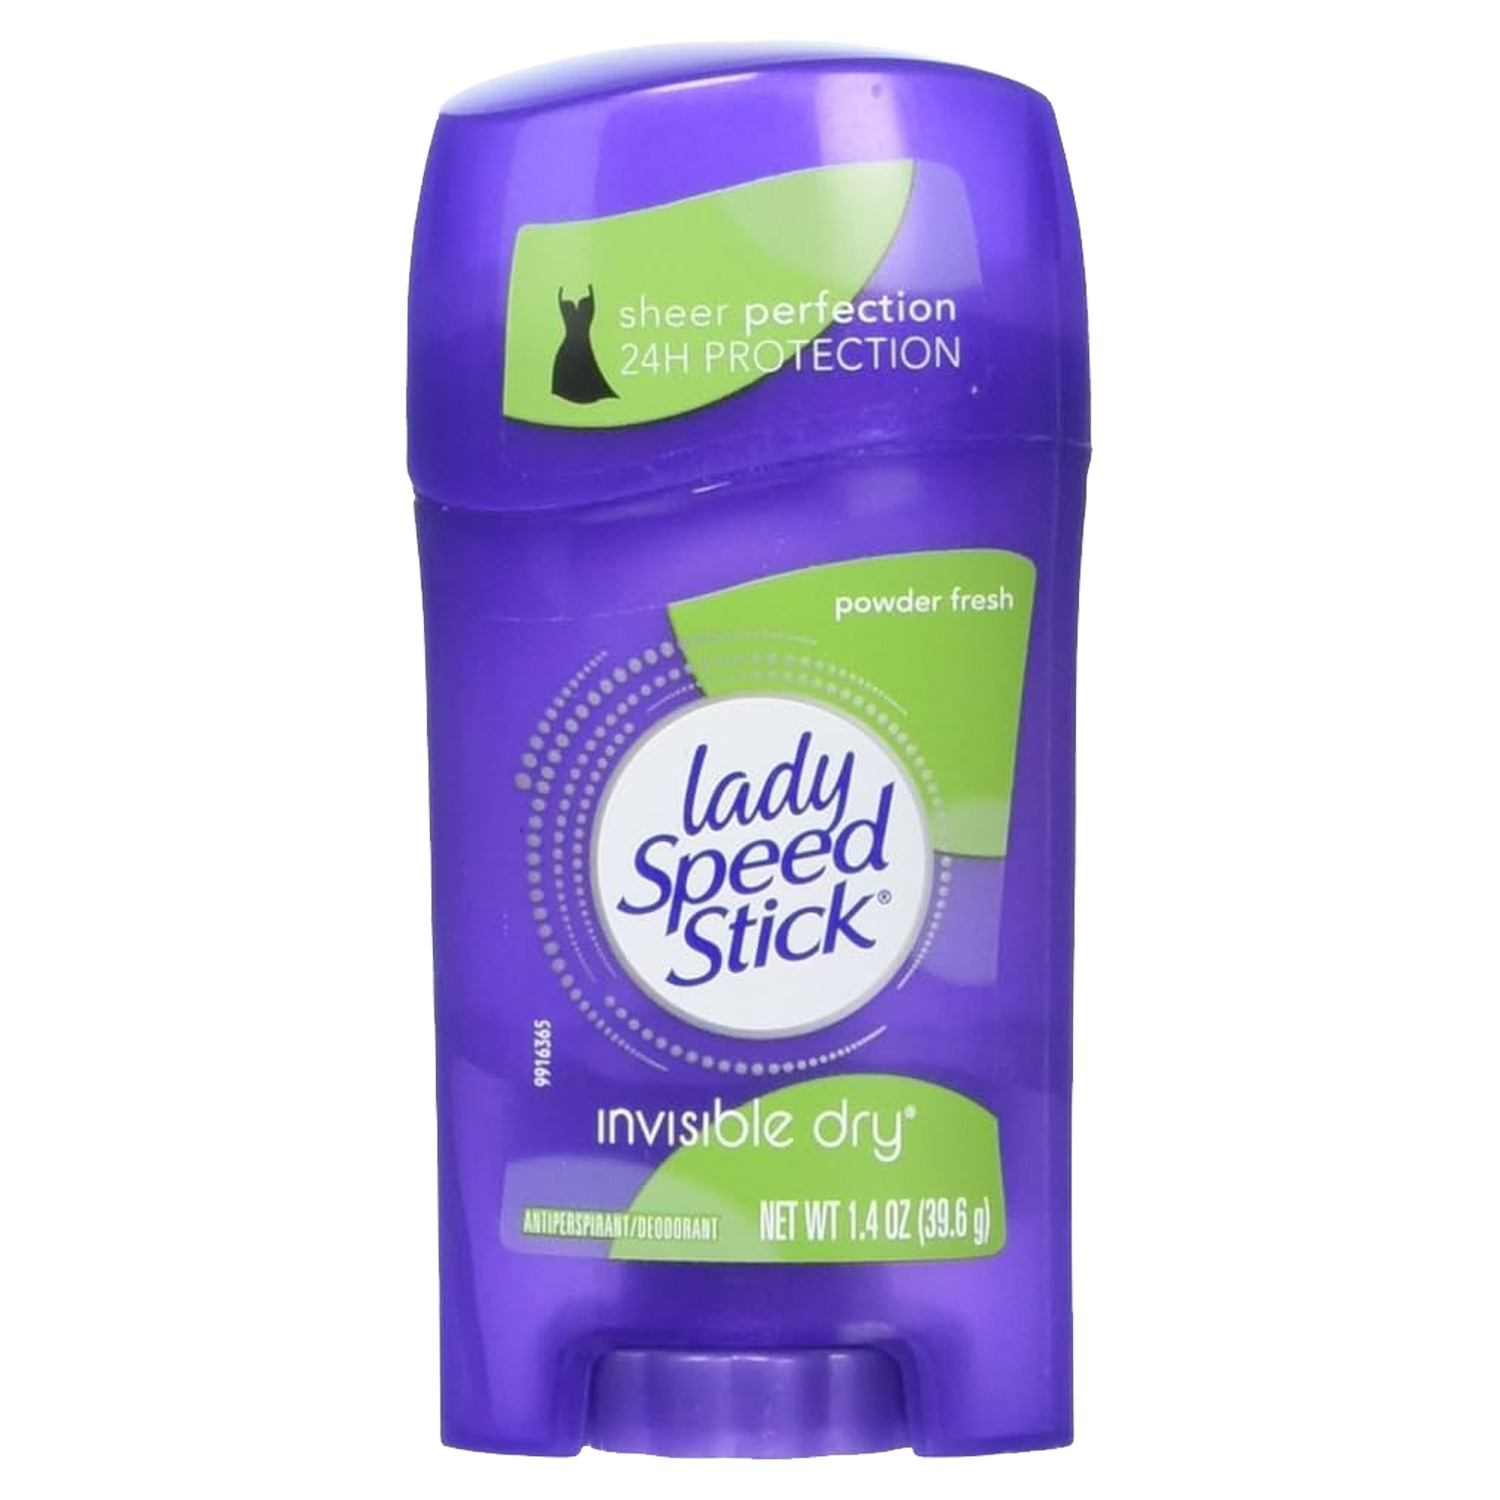 Lady Speed Stick - Invisible Dry antiperspirant deodorant, 39.6g - Powder Fresh